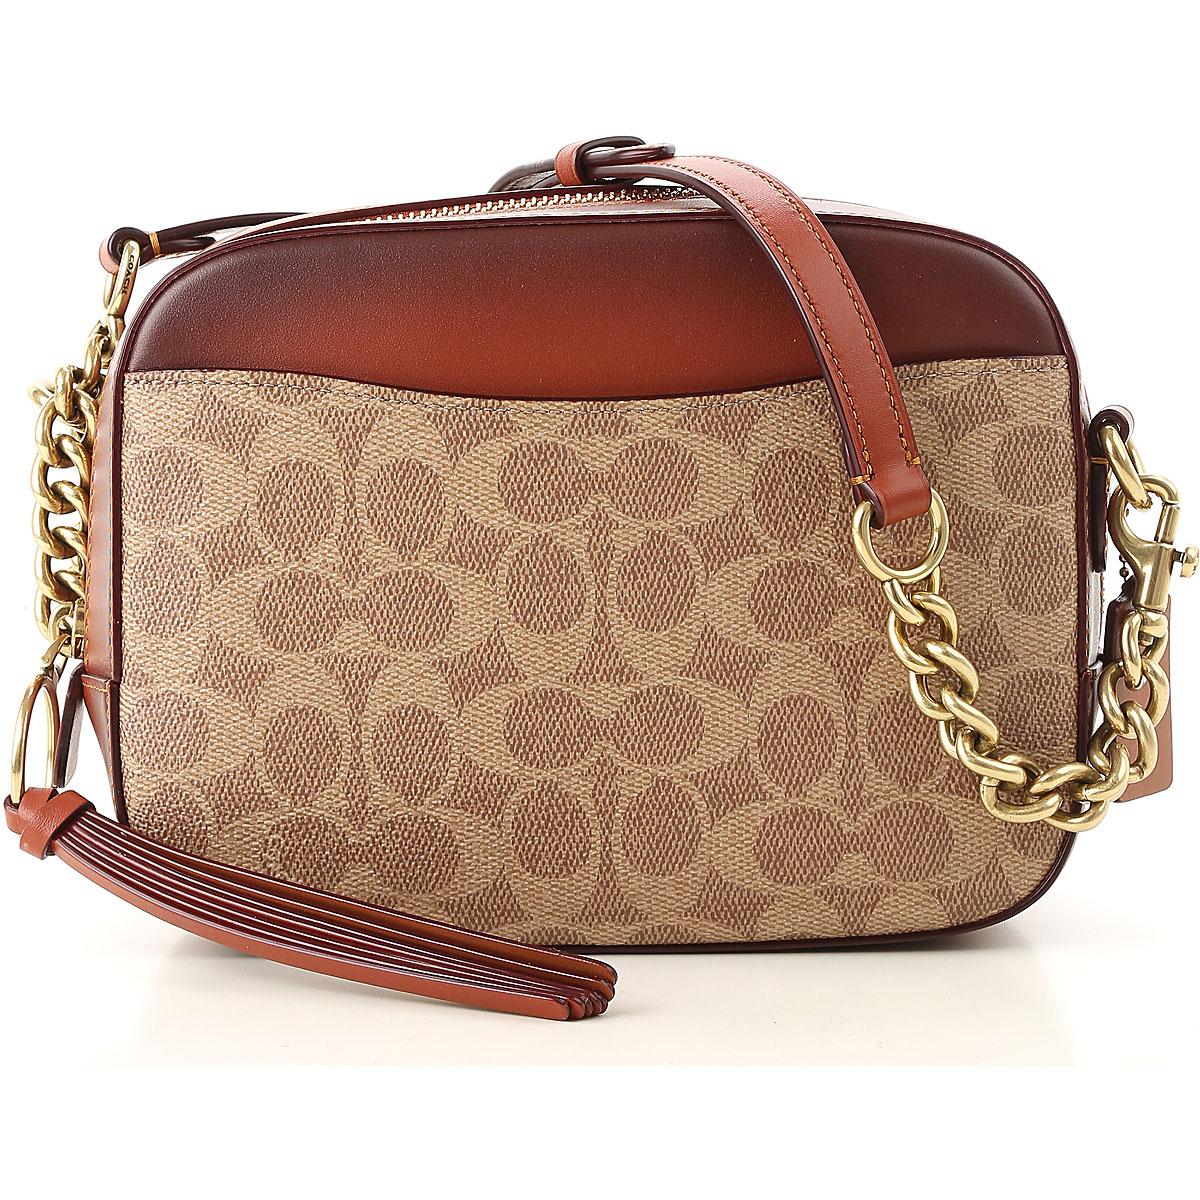 Handbags Coach, Style code: 31208-b4-ru